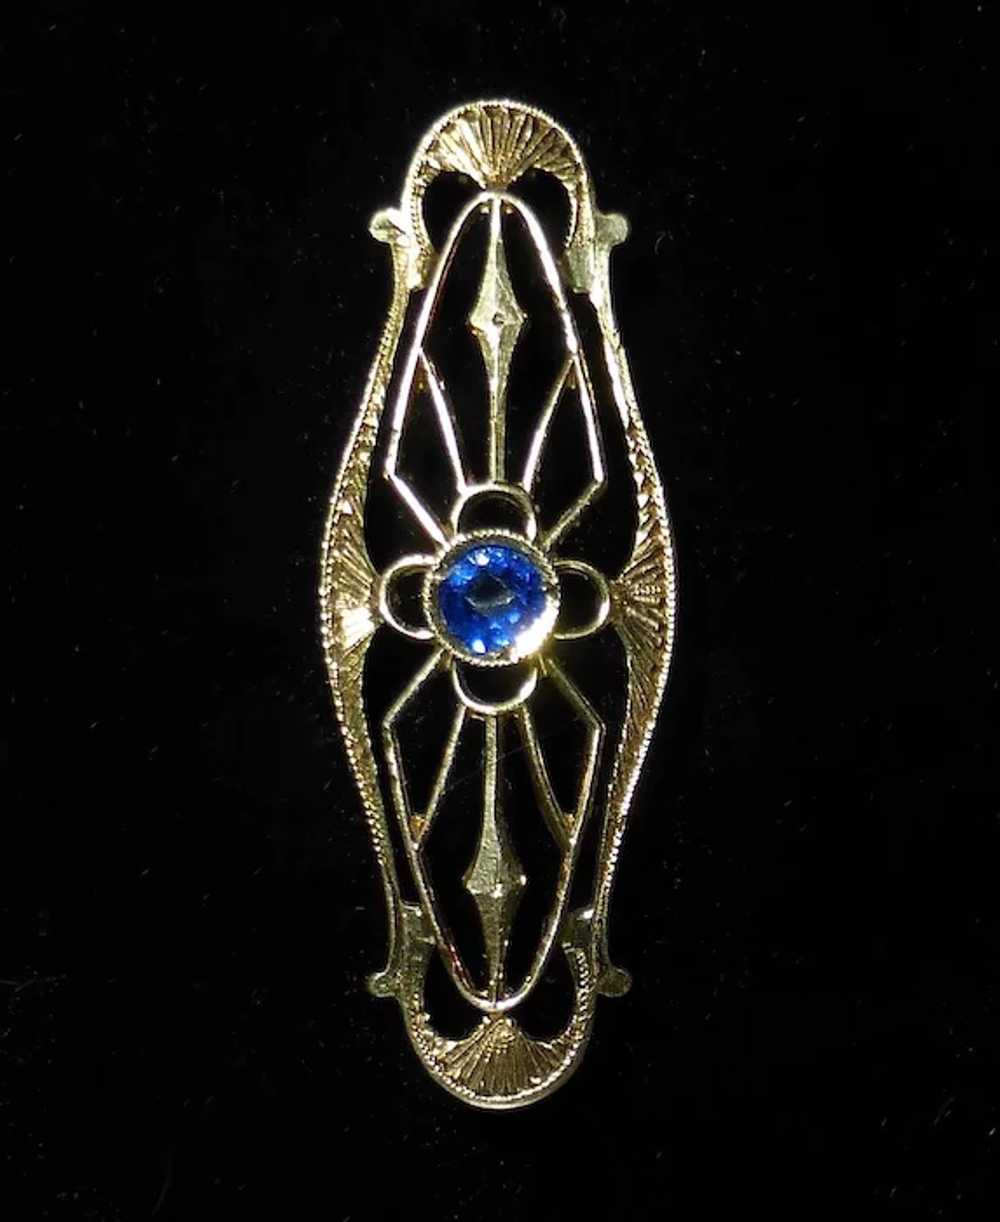 Antique Edwardian 10k Blue Jewel Filigree Lace Pin - image 4